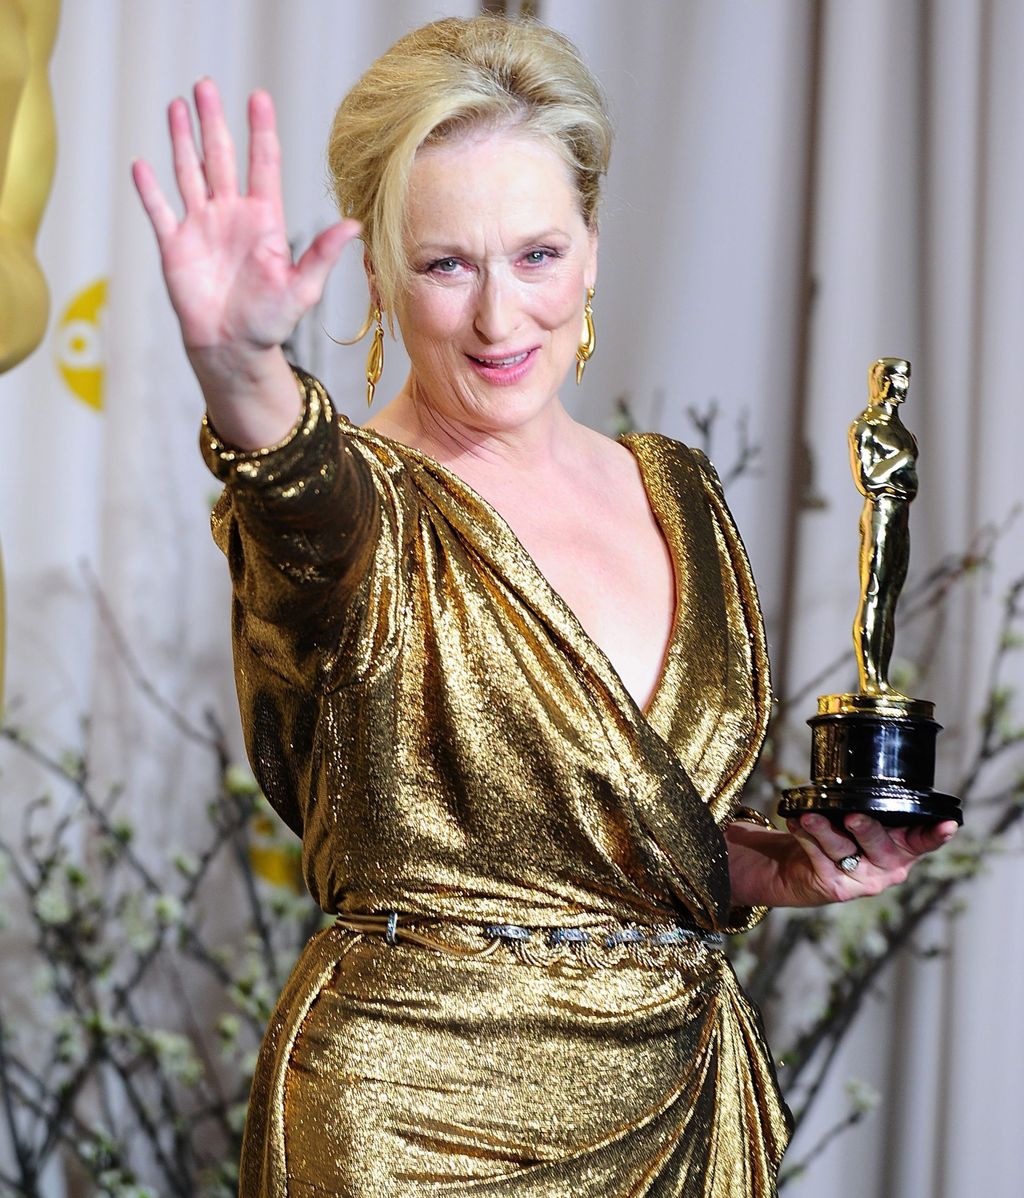 The award-winning Meryl Streep